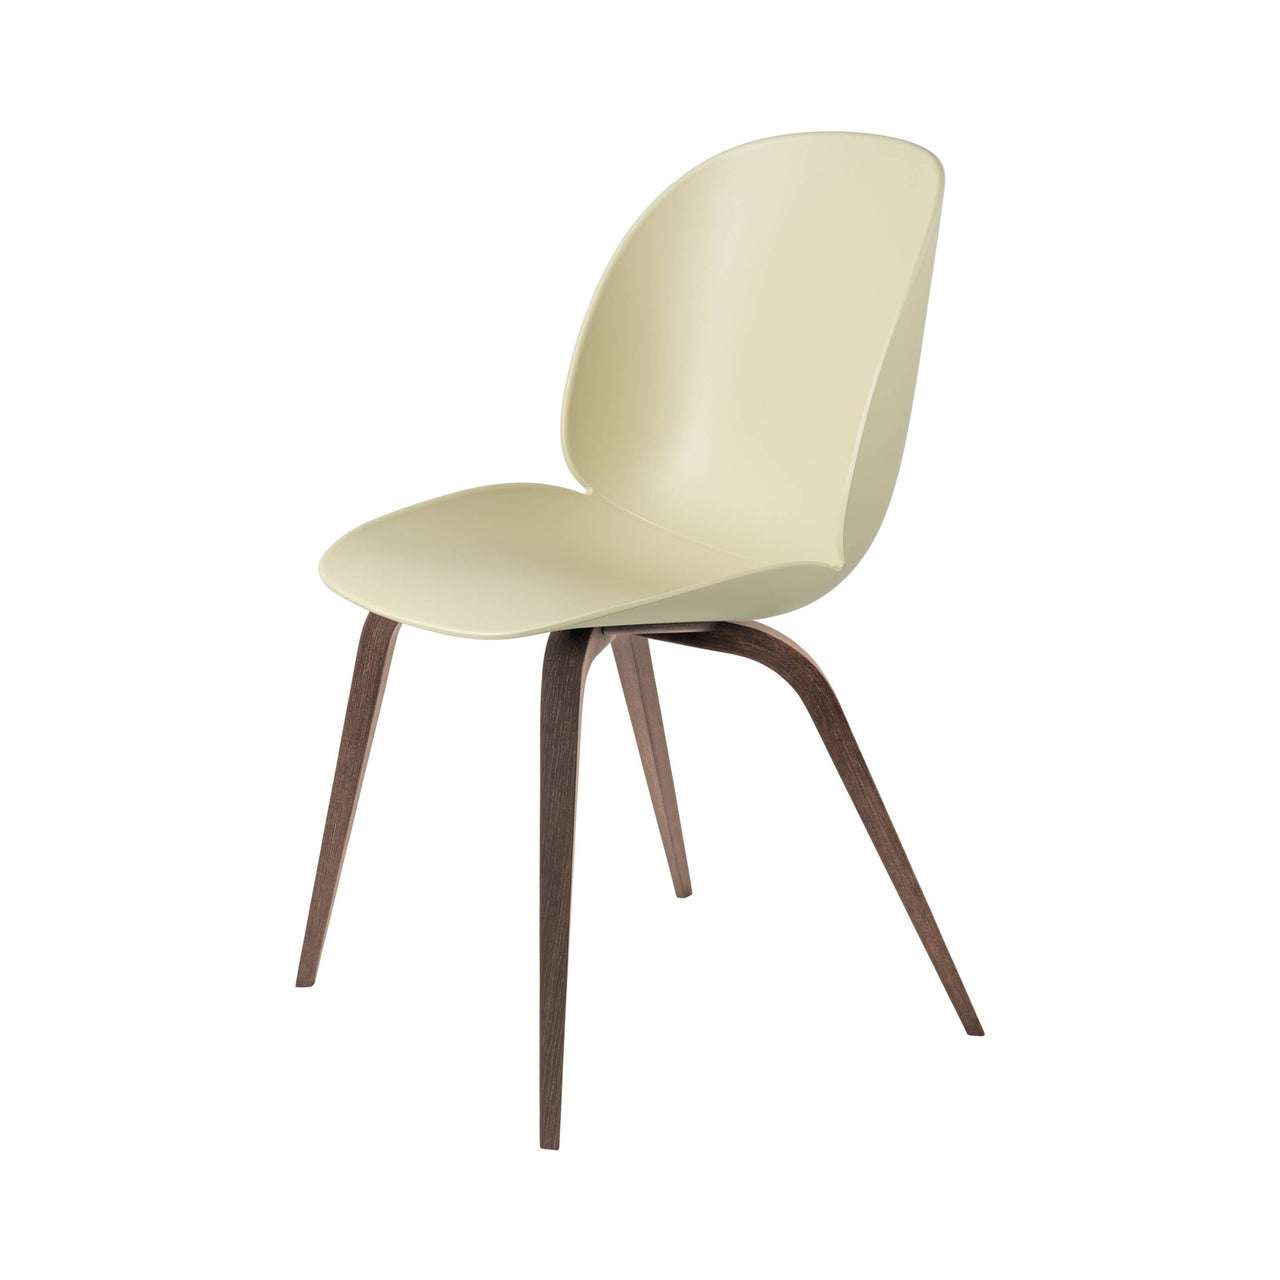 Beetle Dining Chair: Wood Base + Pastel Green + American Walnut